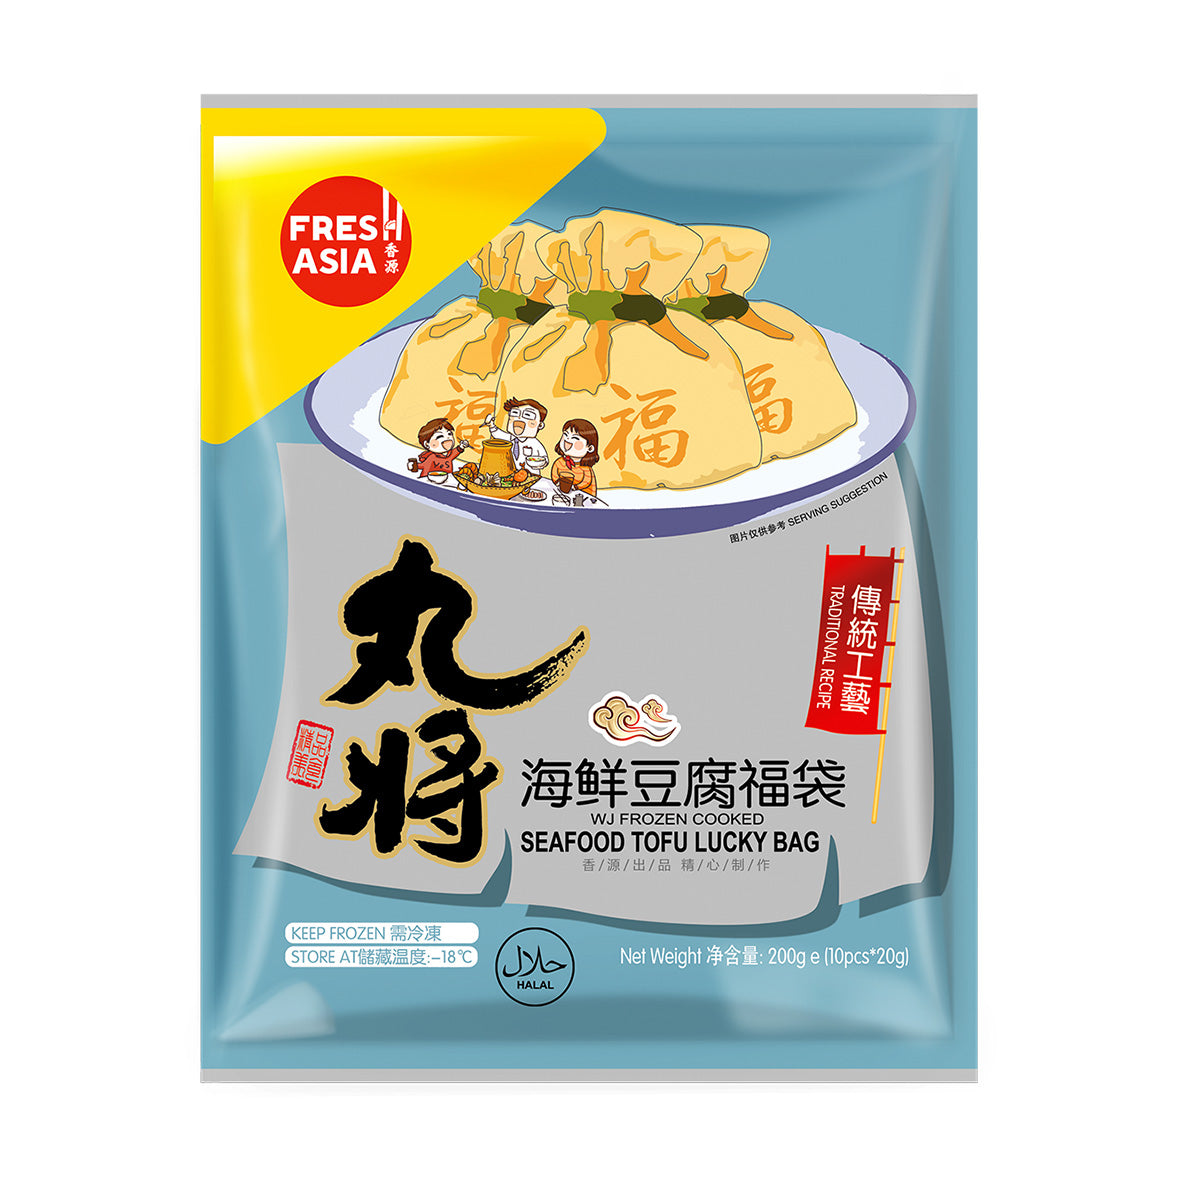 丸将海鲜豆腐福袋200g | xinyafresh.com – XINYA FRESH image